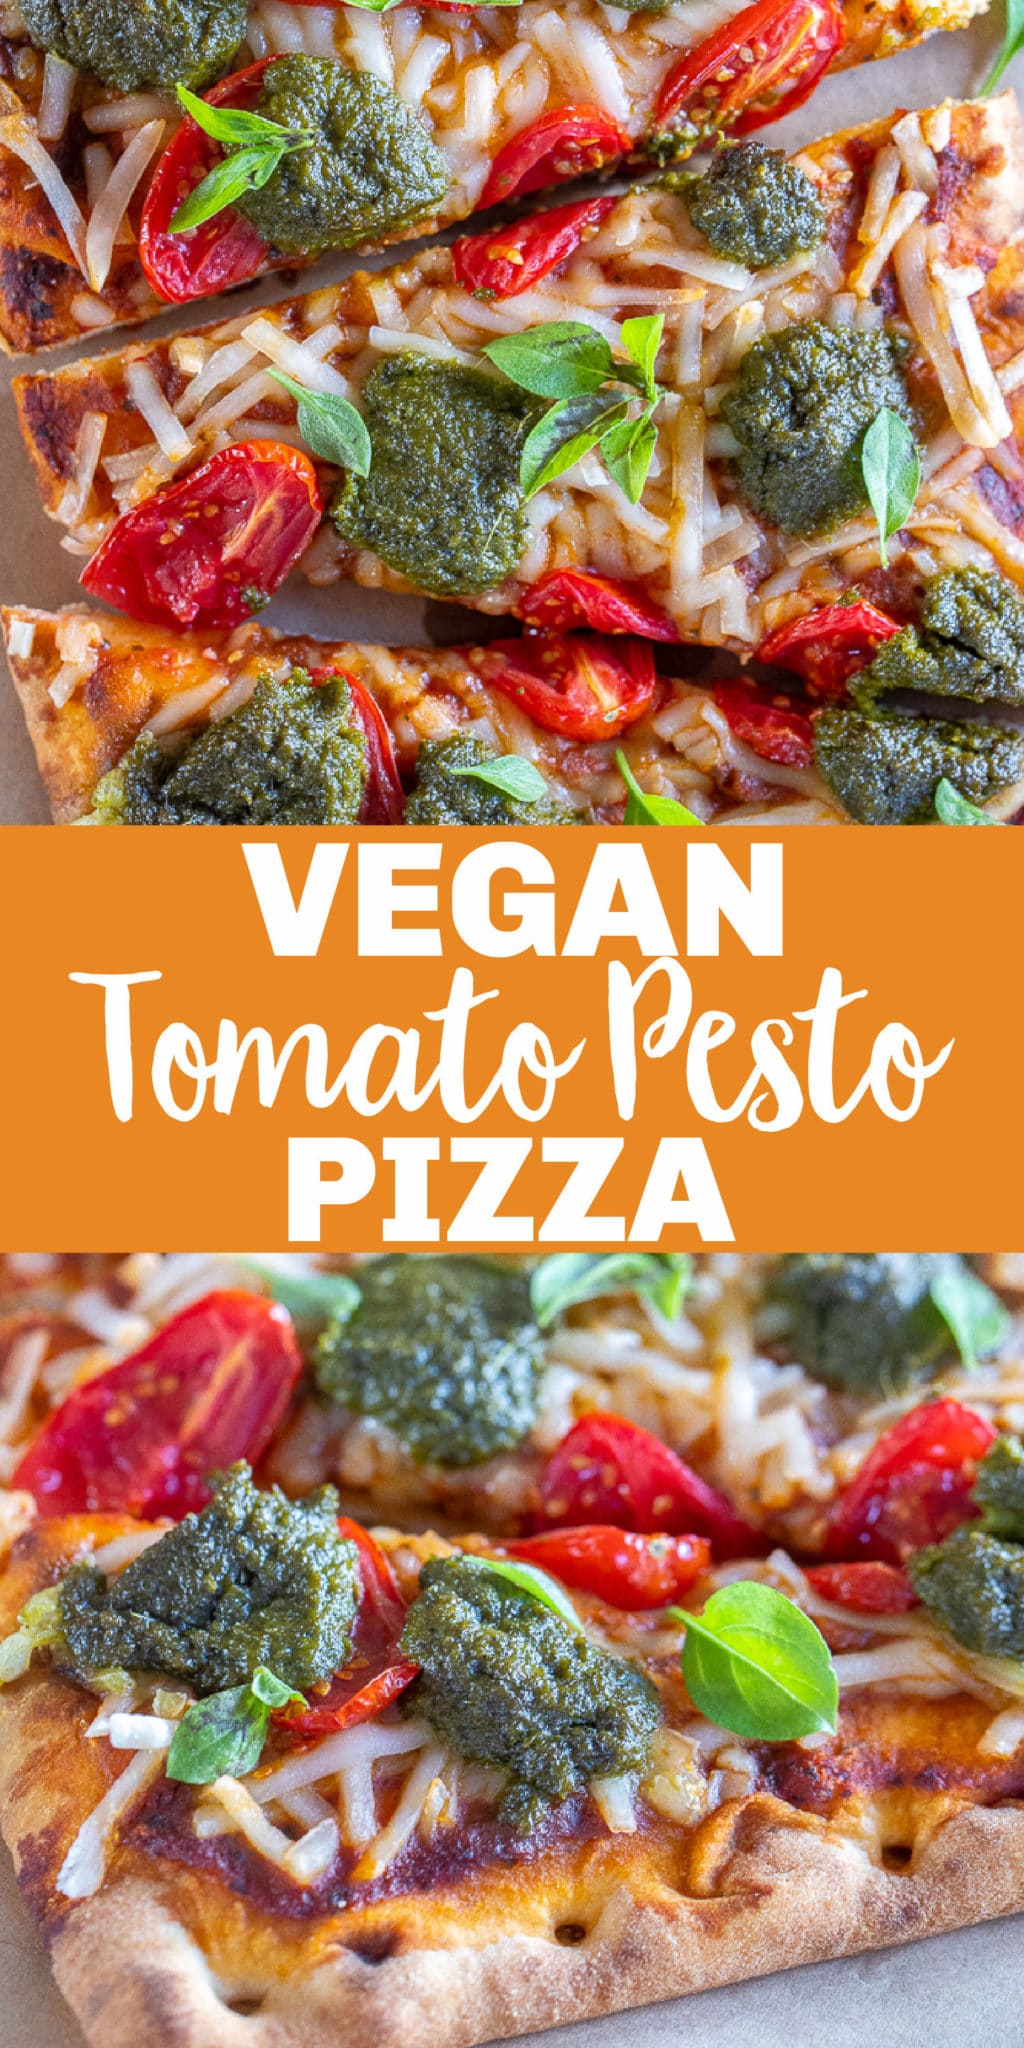 Trader Joe's 5 Ingredients - Vegan Tomato Pesto Pizza - She Likes Food